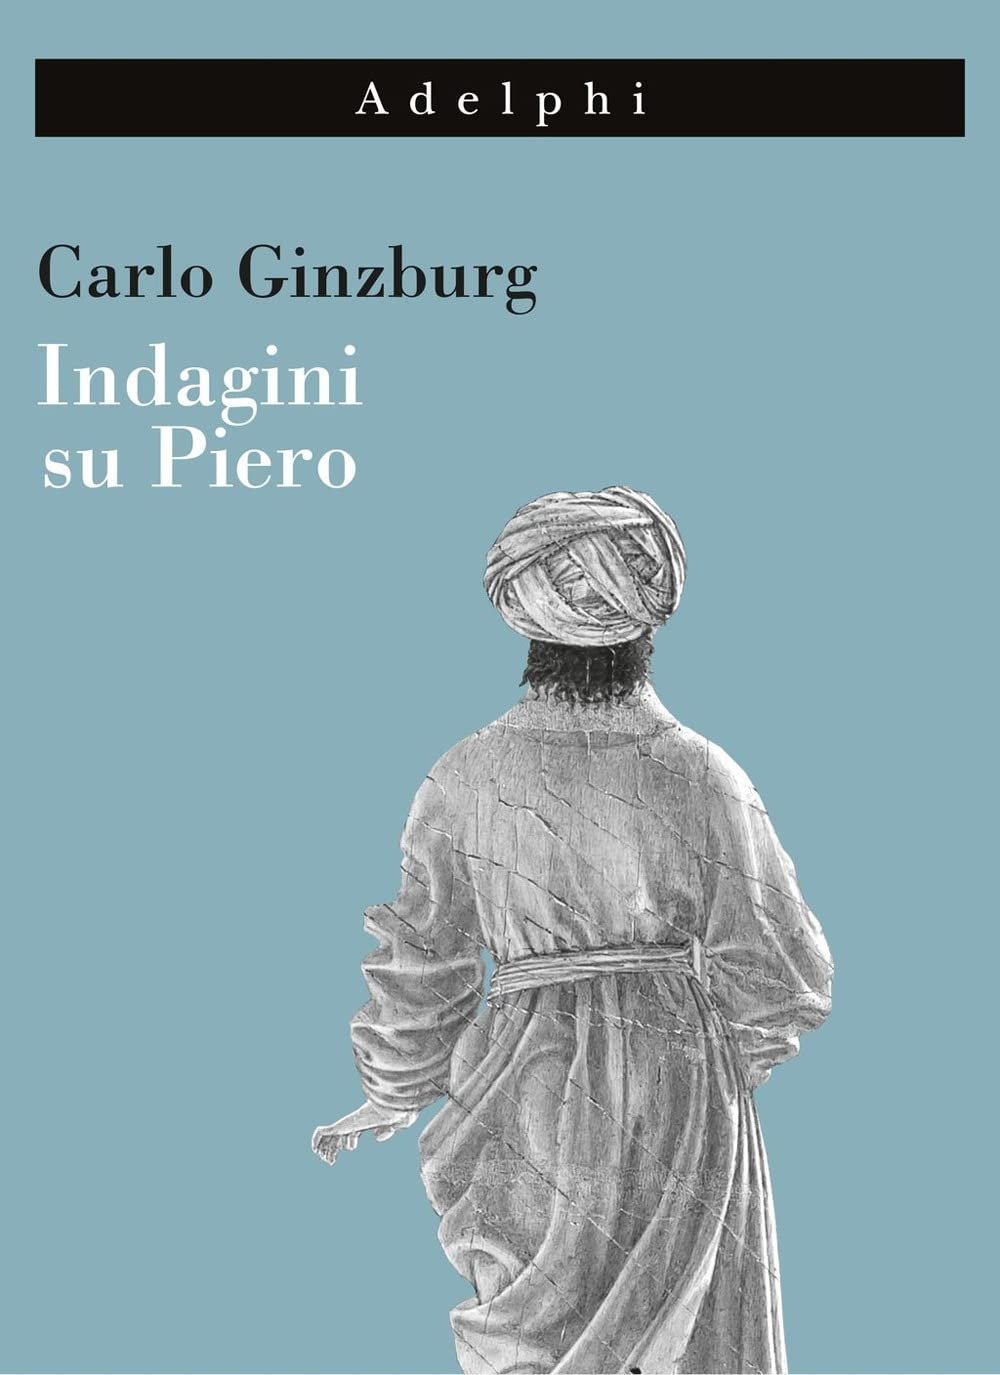 Carlo Ginzburg – Indagini su Piero (Adelphi, Milano 2022)